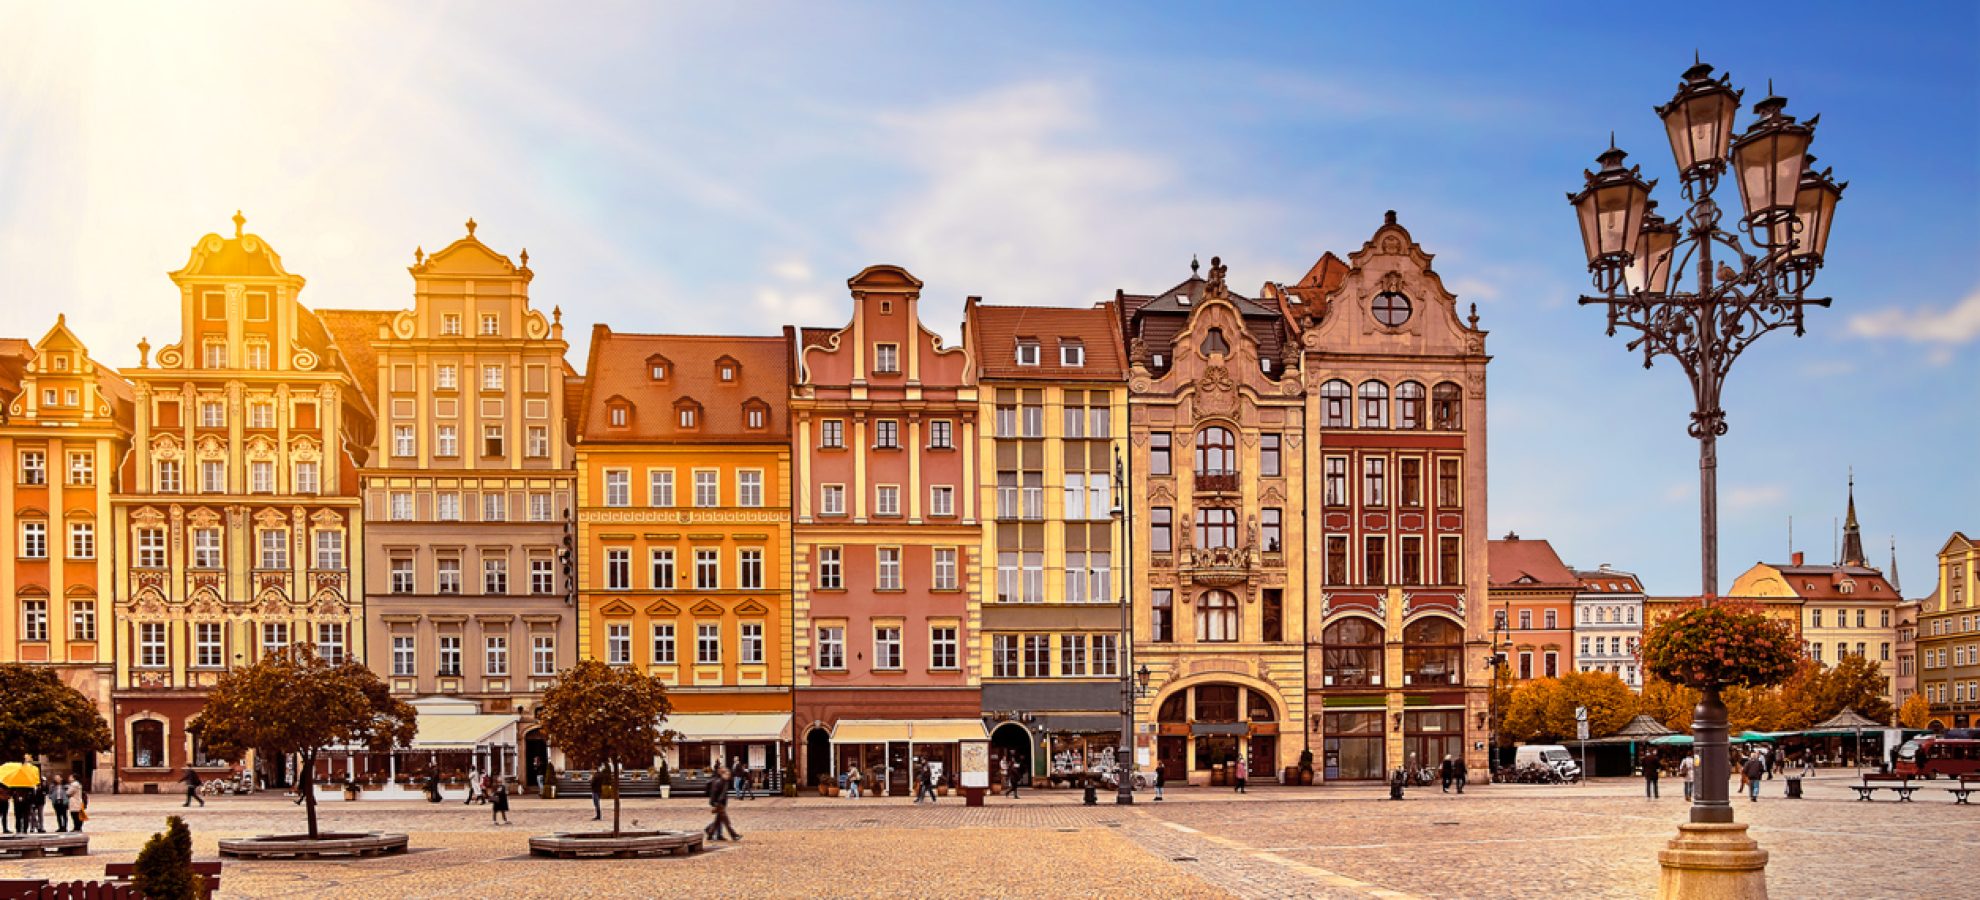 Wroclaw, Poland, Europe